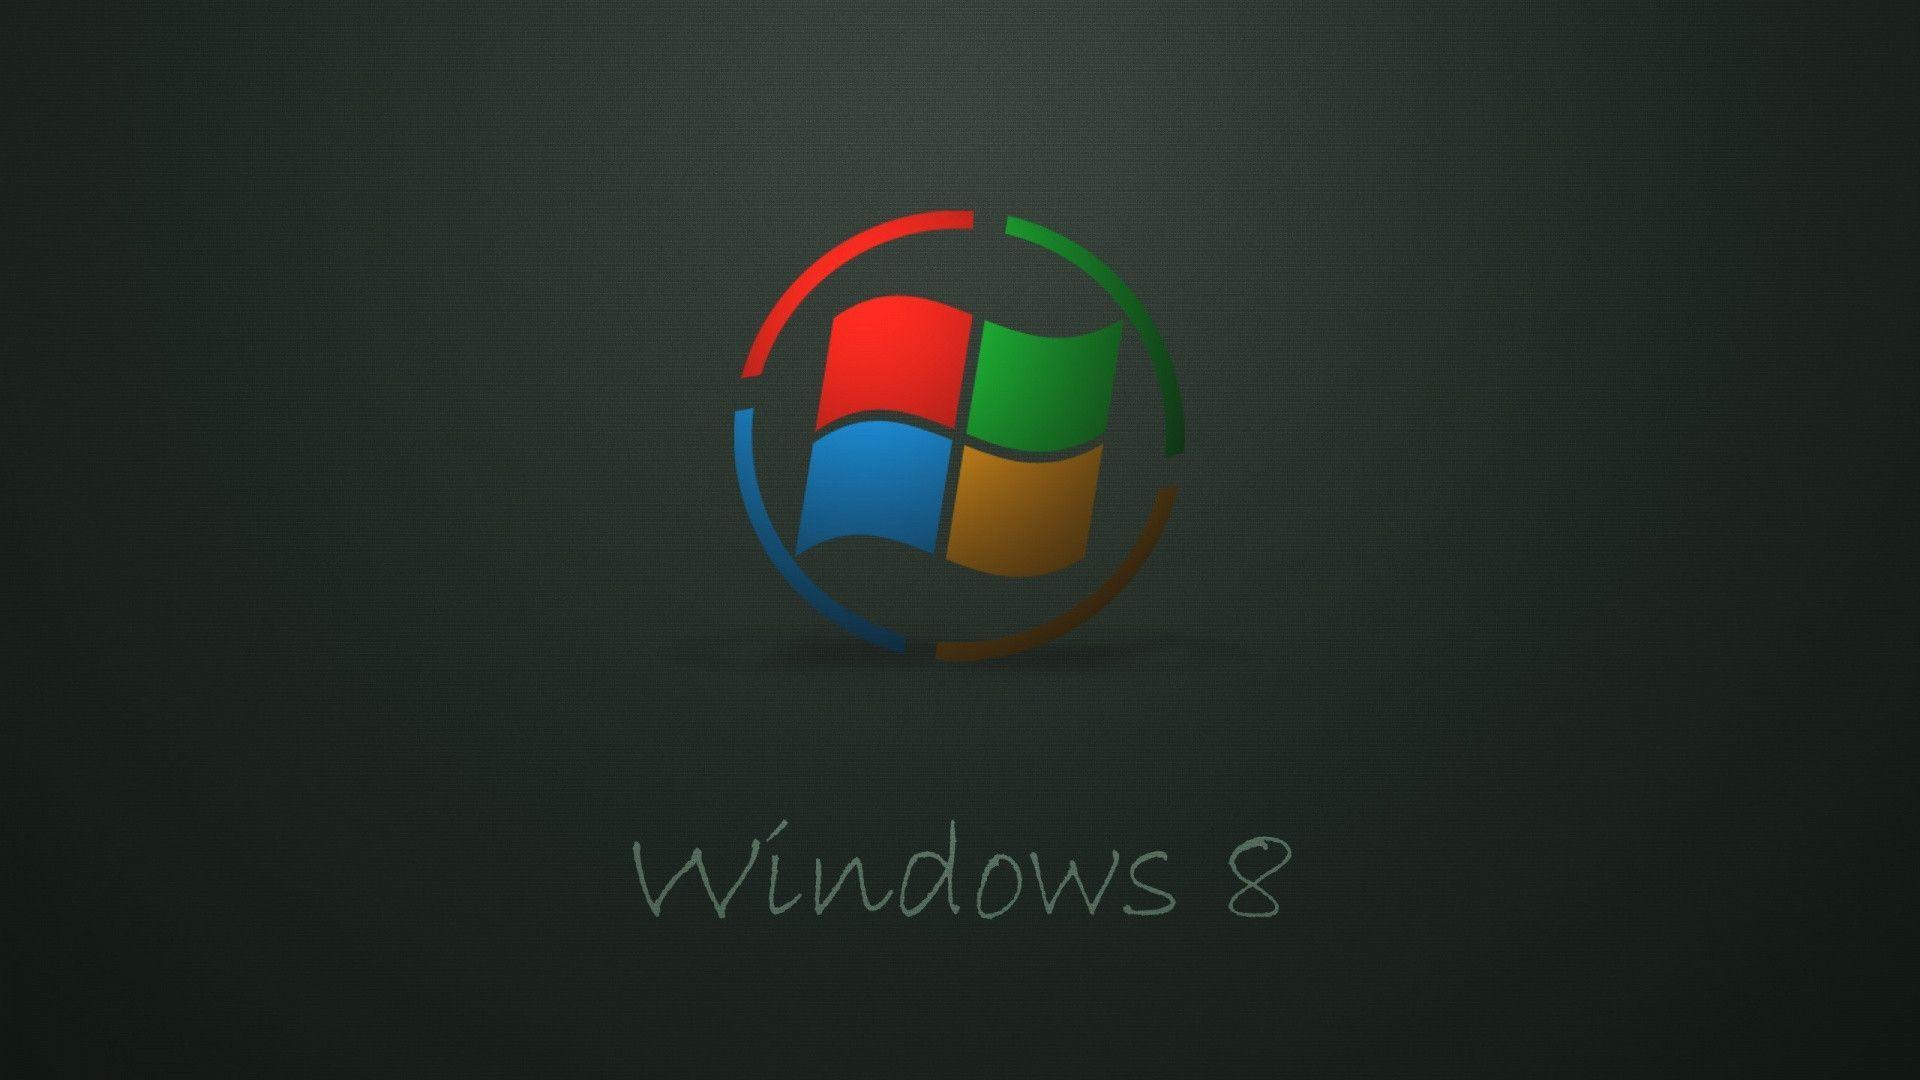 Windows 8 Computer Wallpaper, Desktop Background 1920x1080 Id